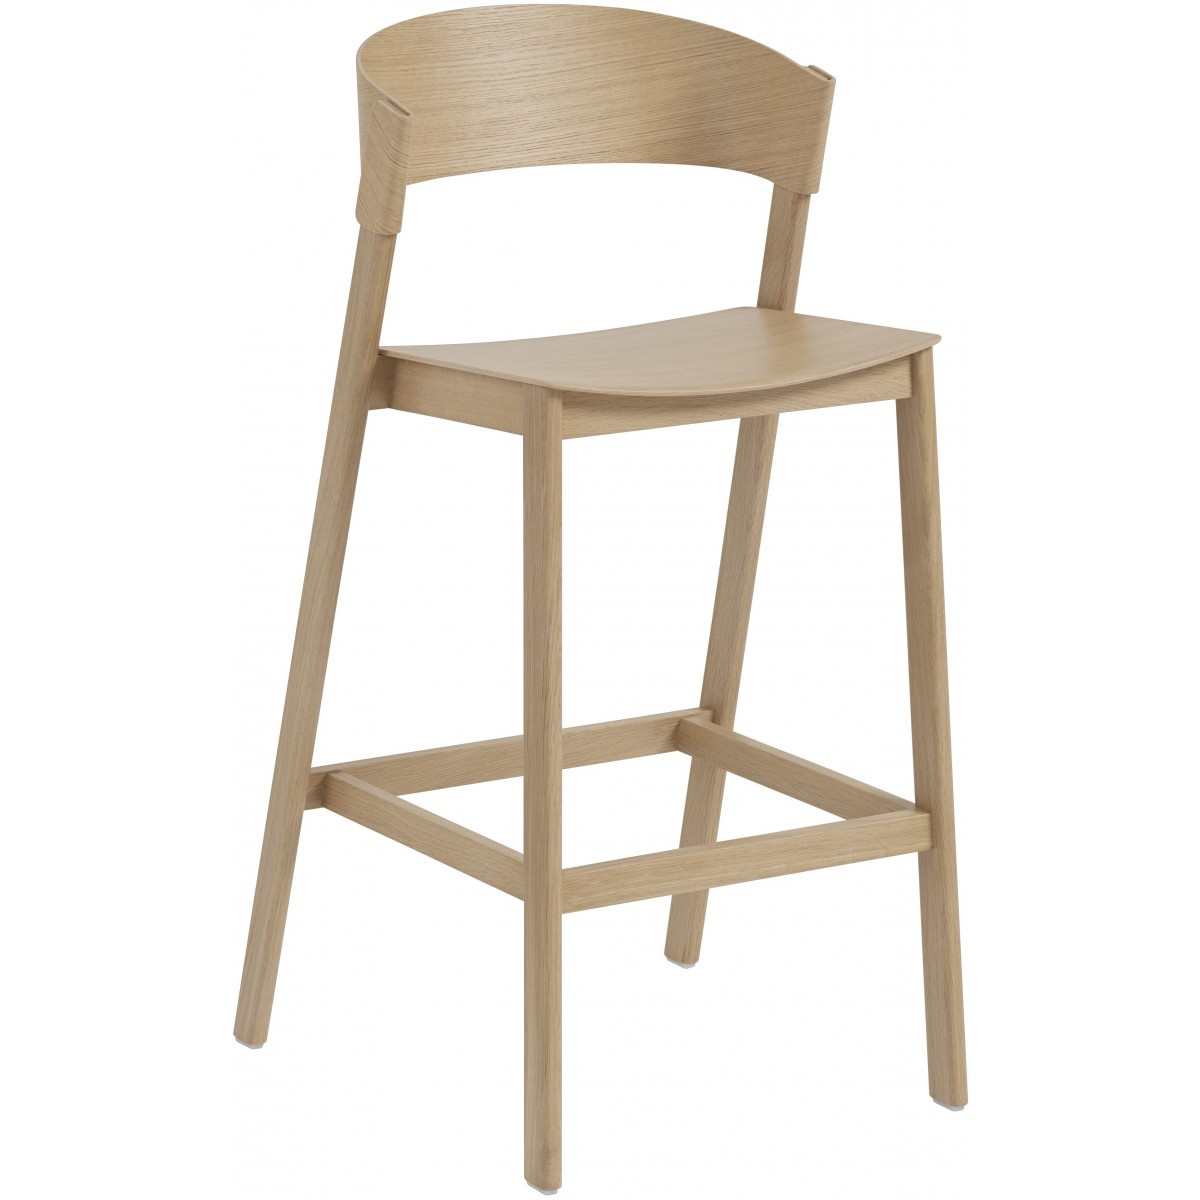 oak - Cover stool